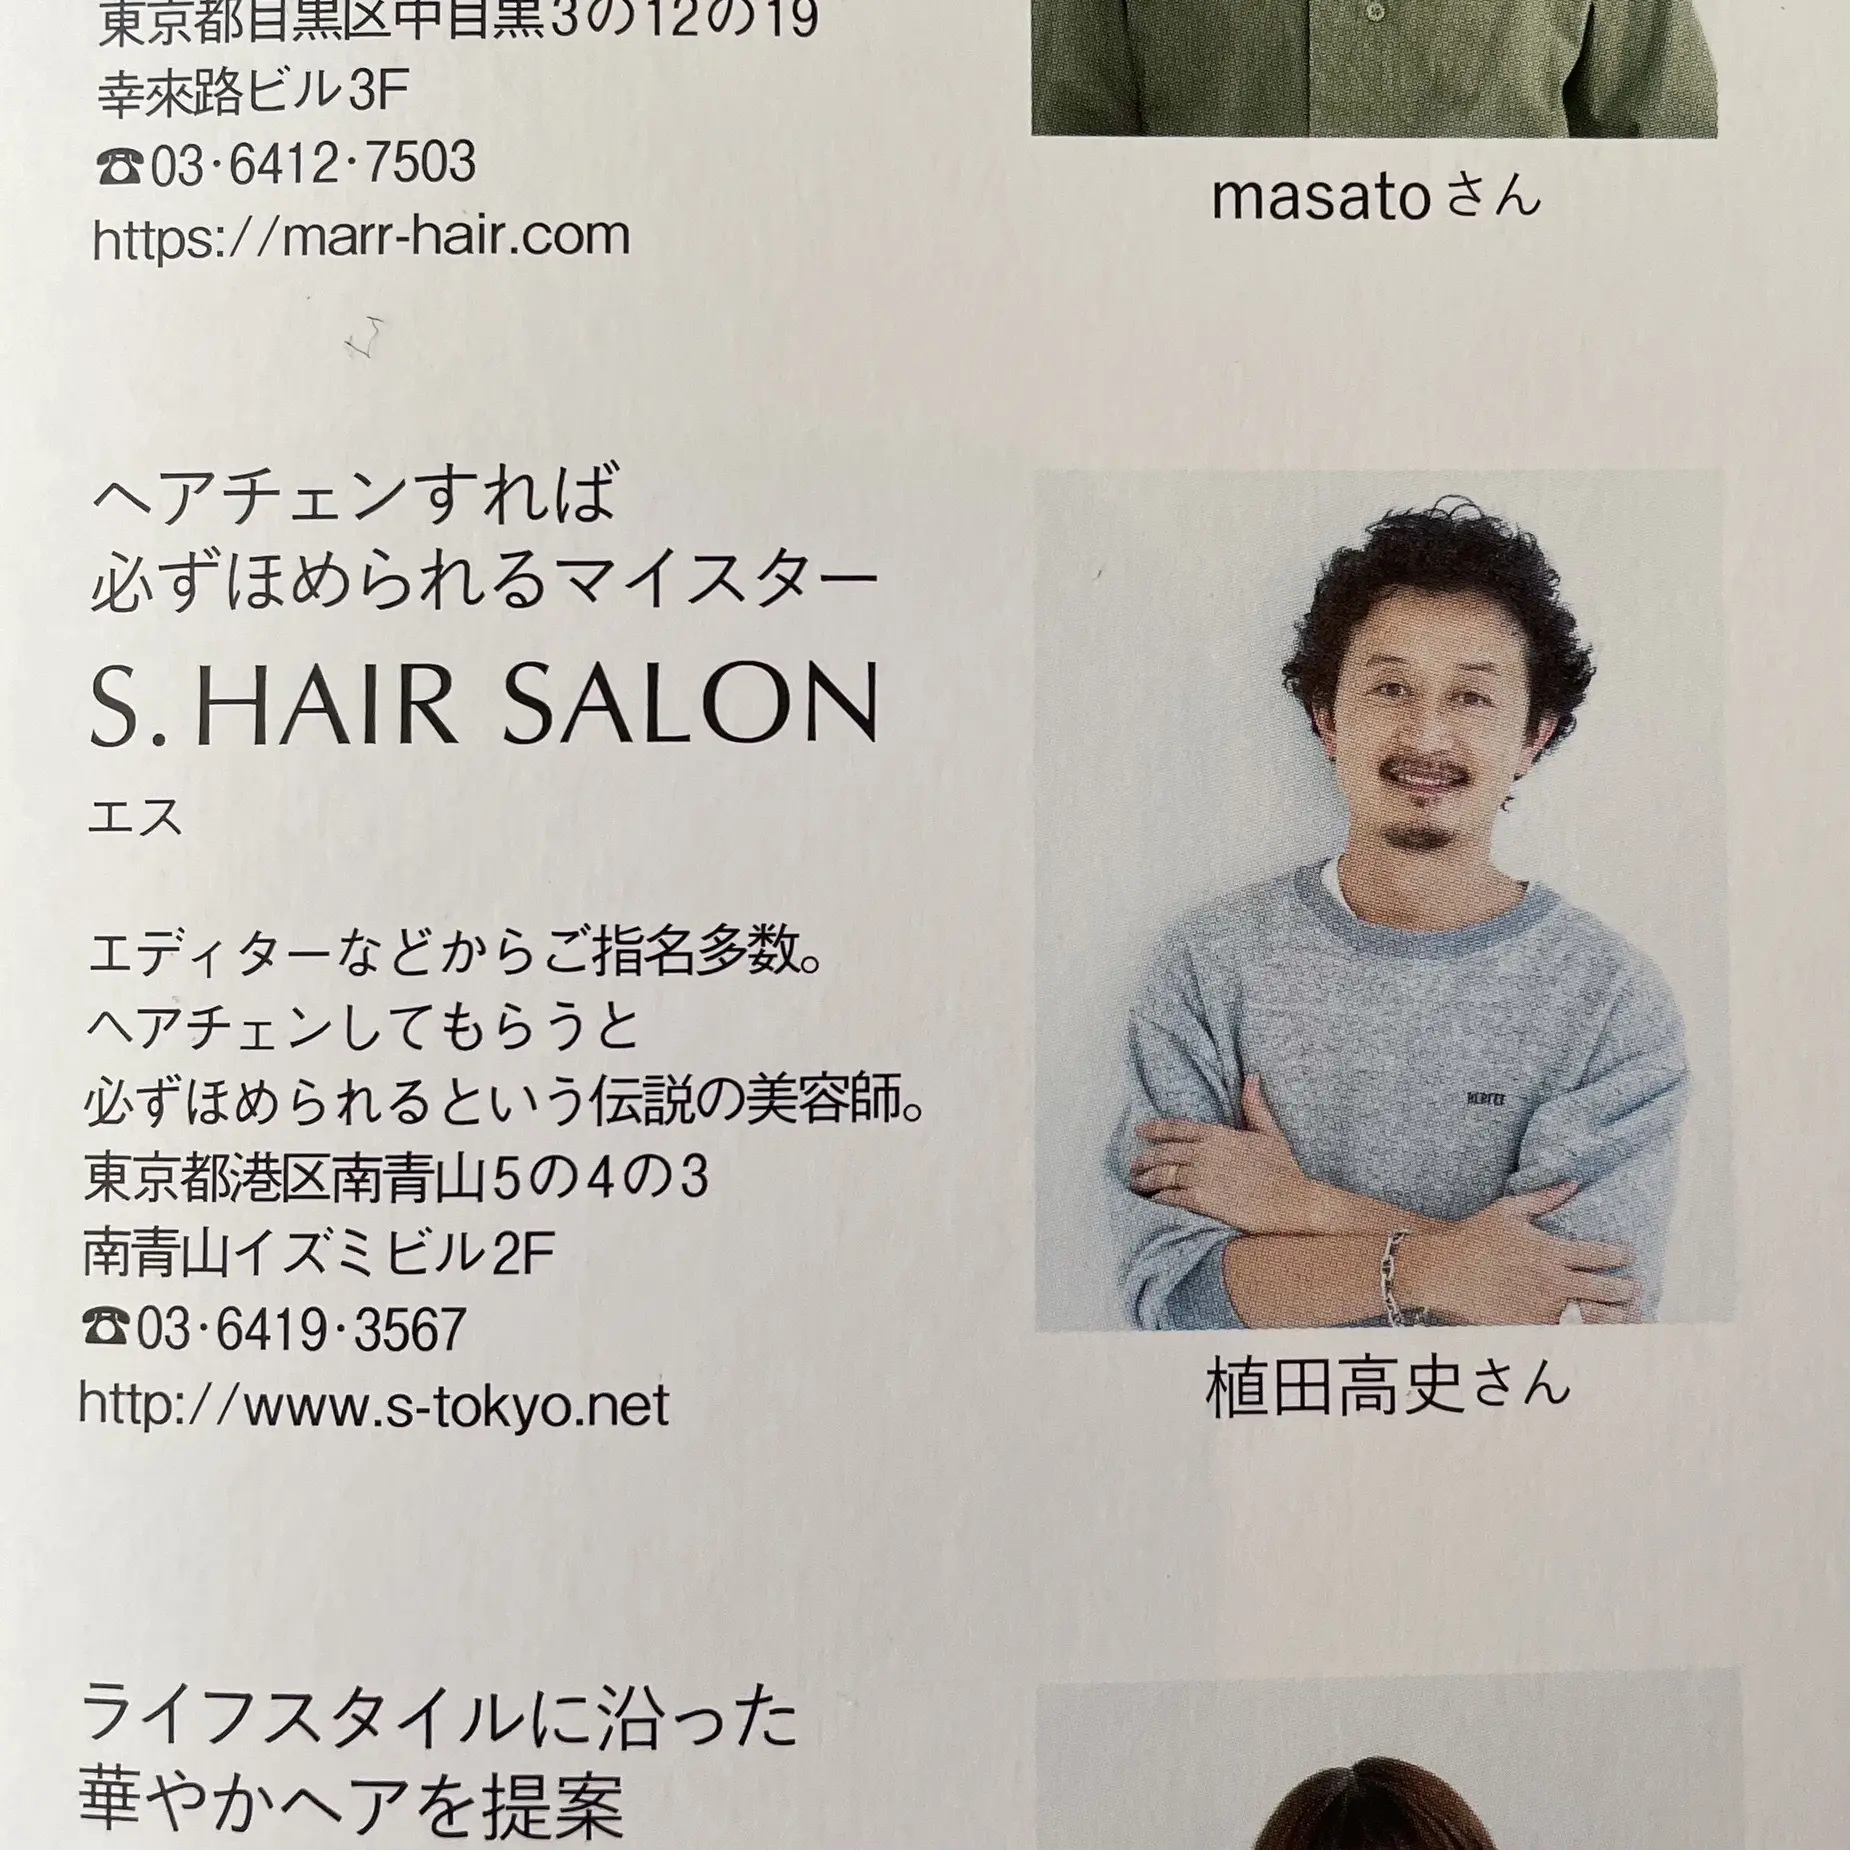 S.HAIR SALONの植田さんの紹介文と顔写真